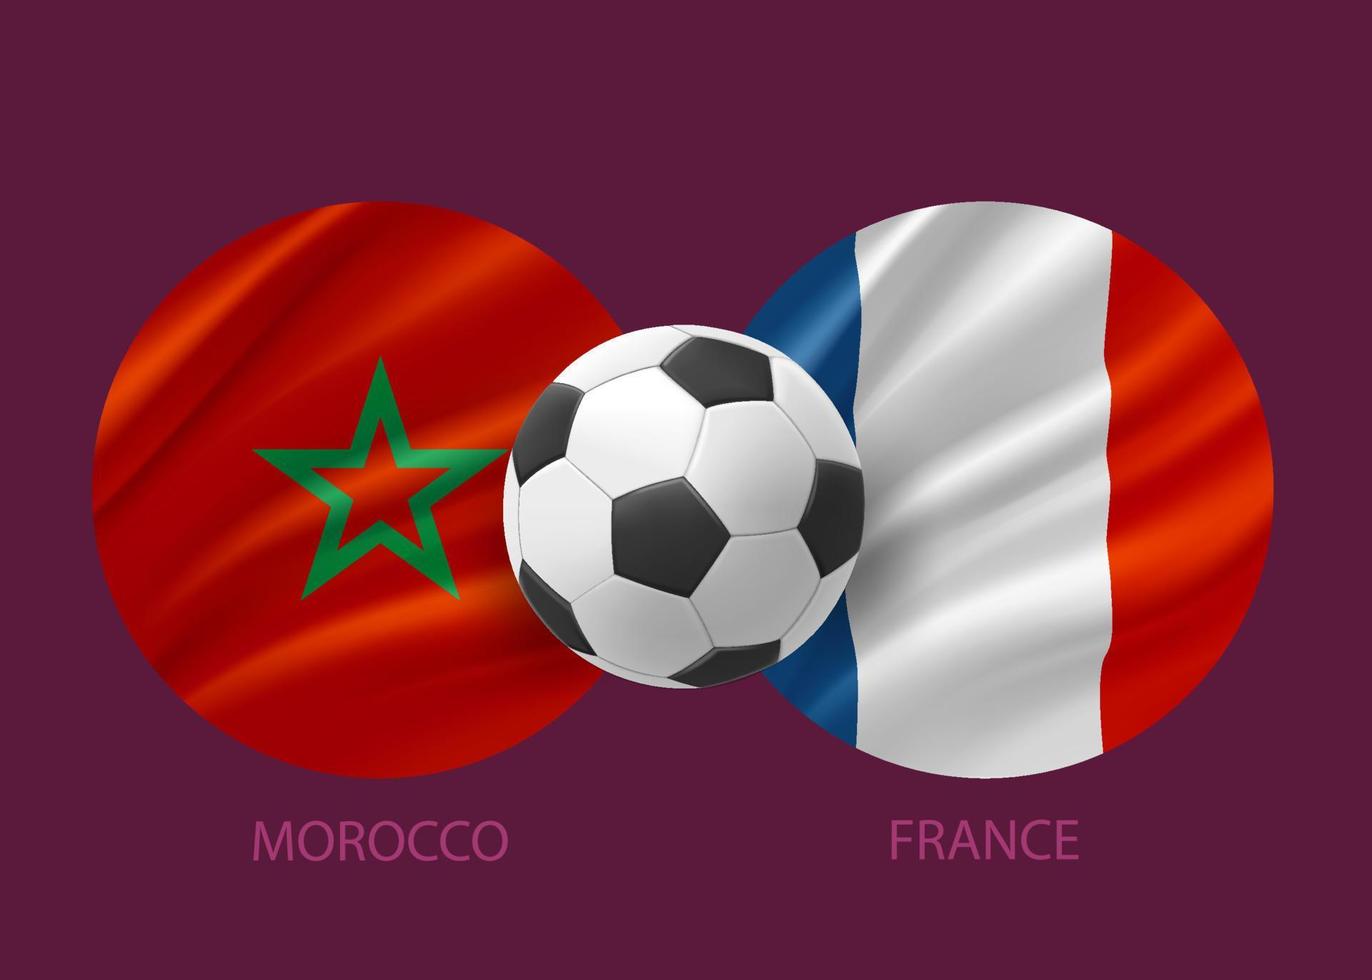 Morocco vs France football match concept. 3d vector illustration